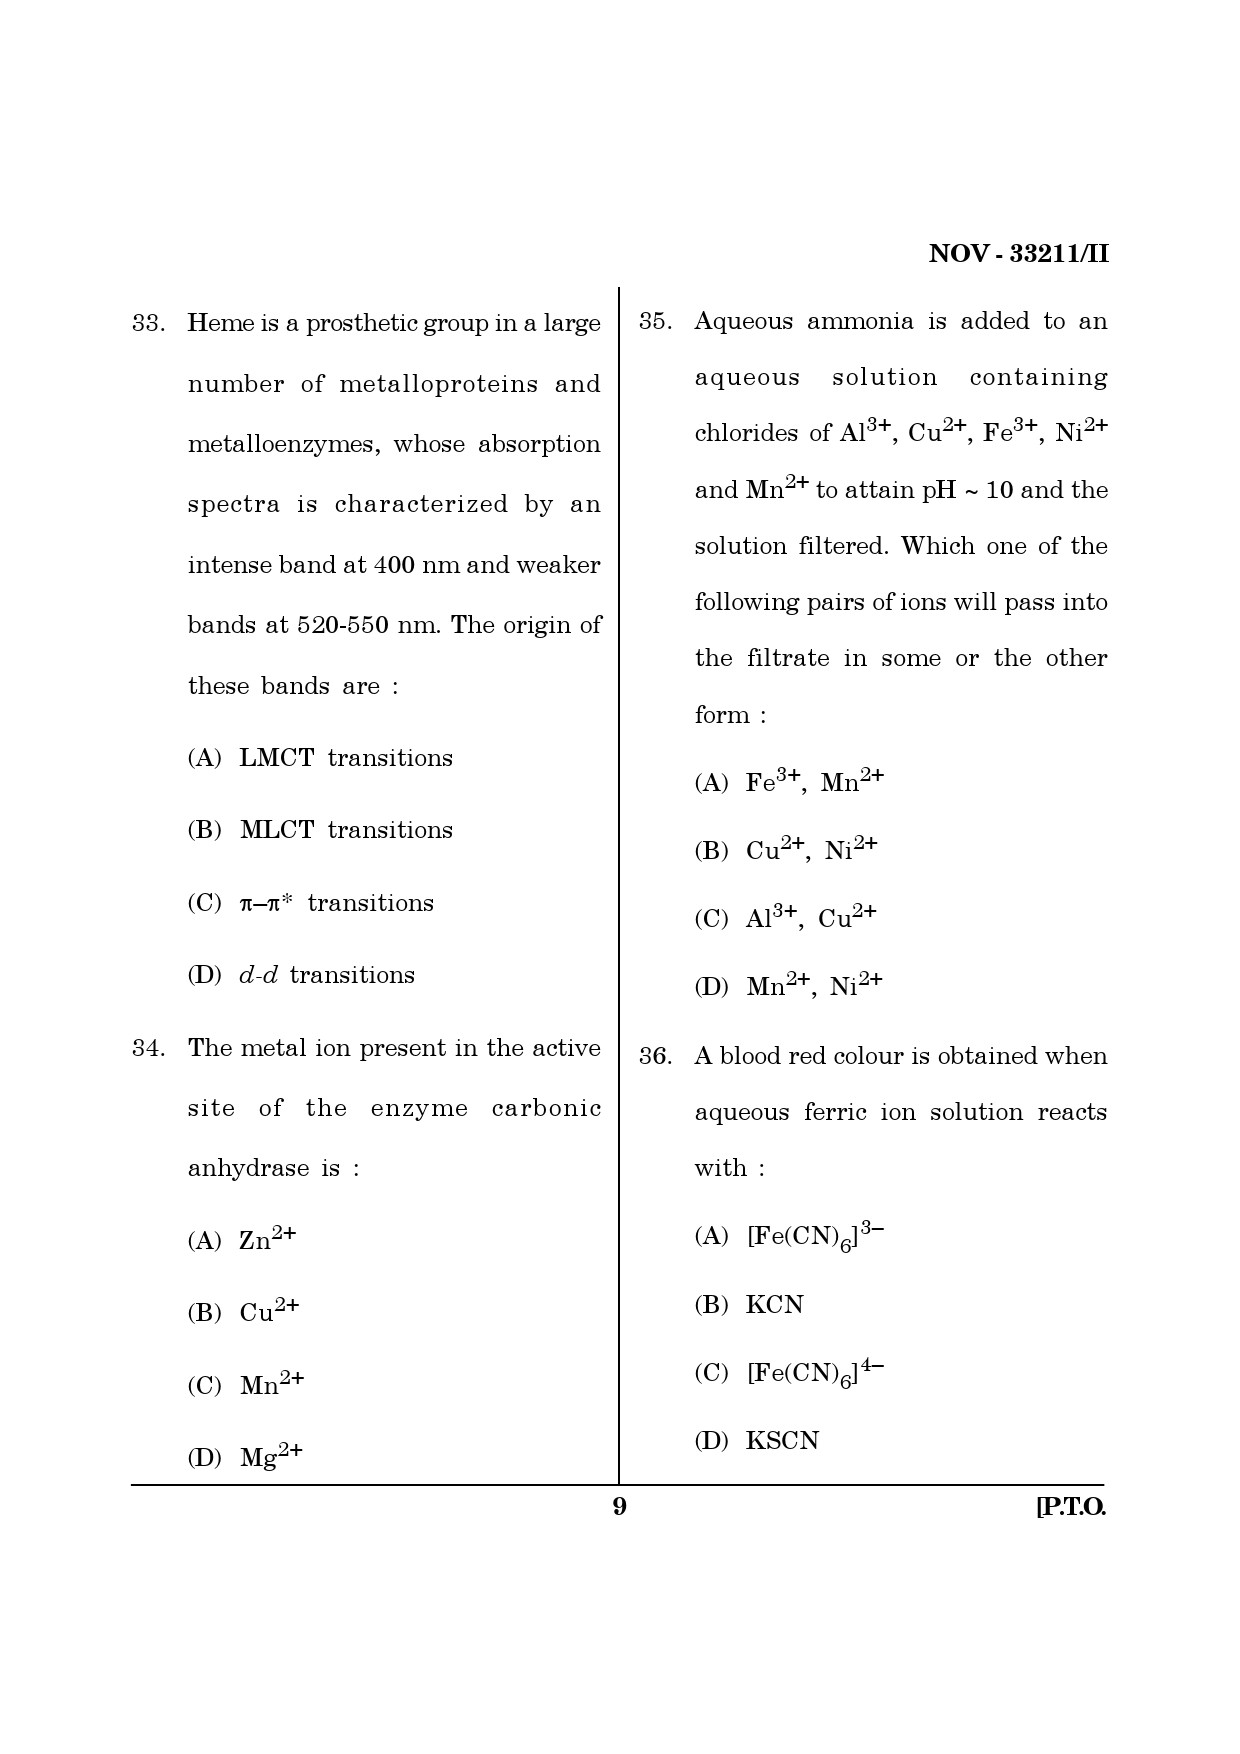 Maharashtra SET Chemical Sciences Question Paper II November 2011 9